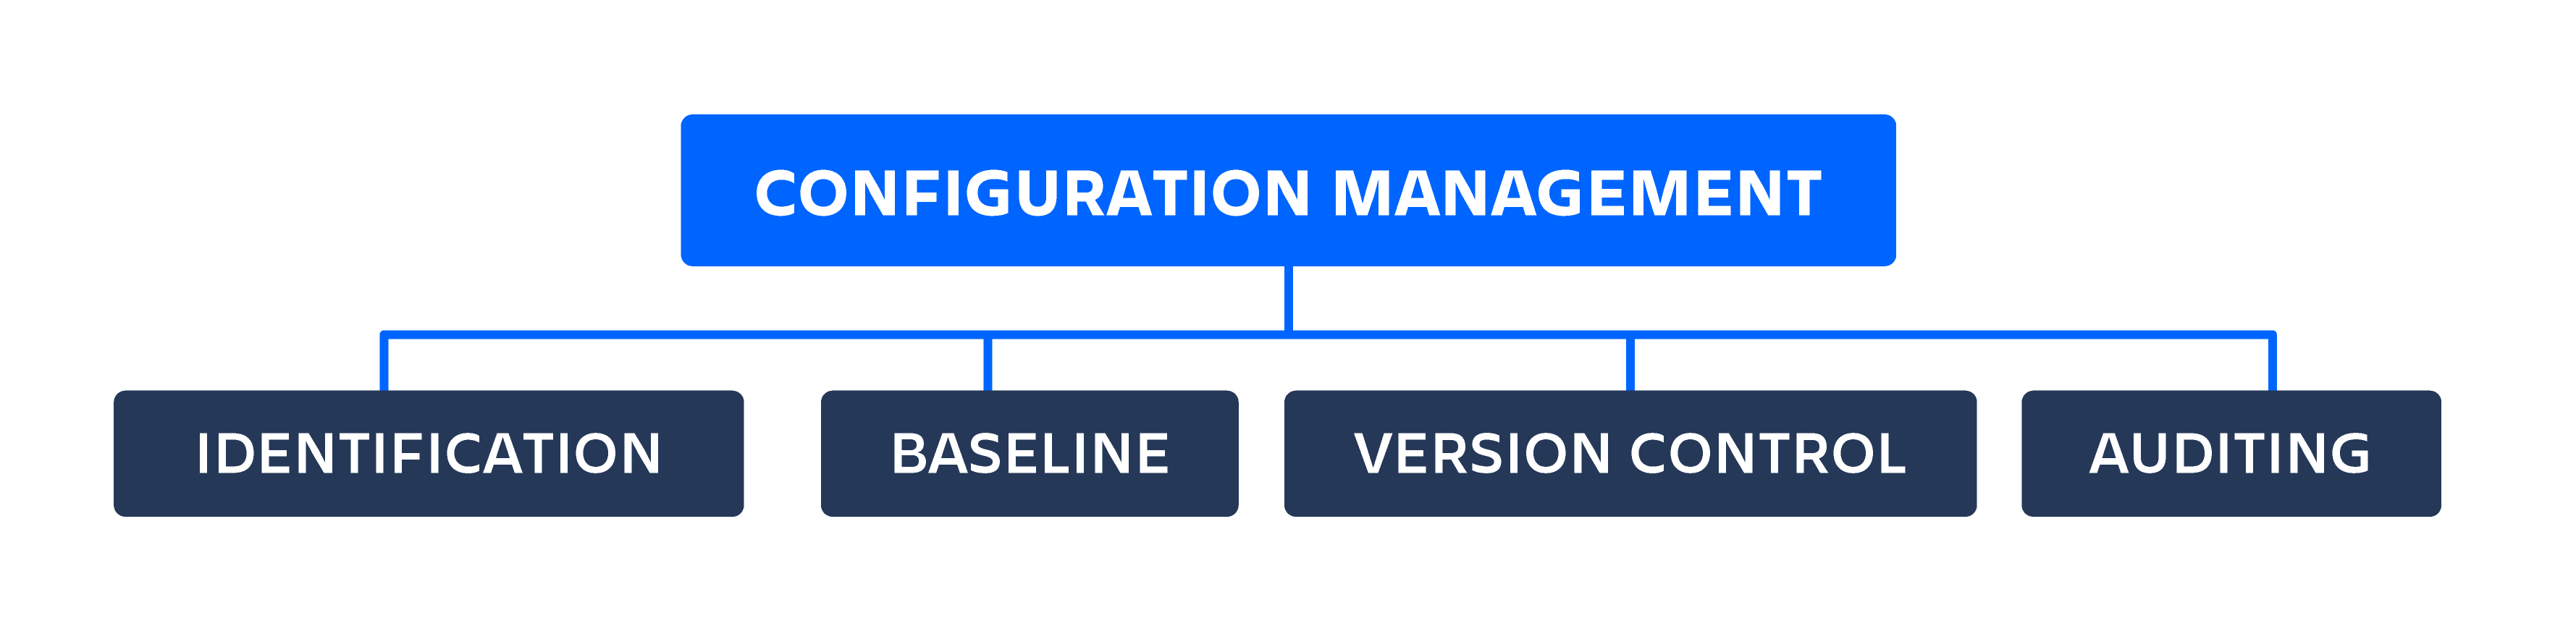 Diagramm: Konfigurationsmanagement